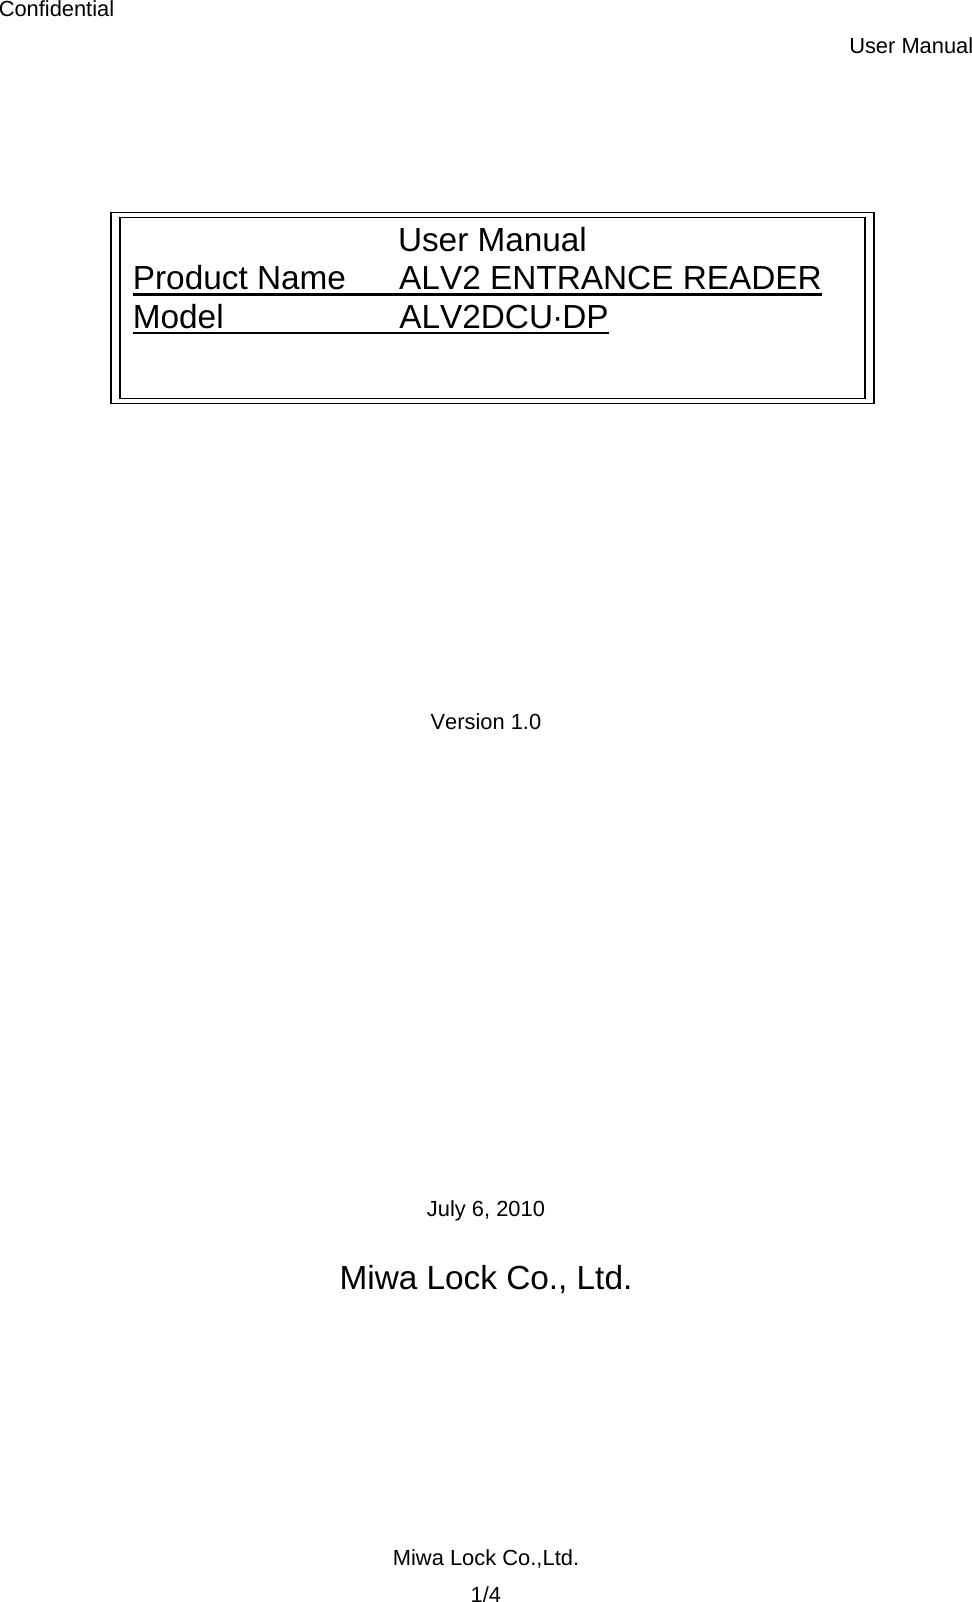 Confidential User Manual Miwa Lock Co.,Ltd. 1/4     User Manual Product Name  ALV2 ENTRANCE READER Model  ALV2DCU·DP              Version 1.0             July 6, 2010  Miwa Lock Co., Ltd.  